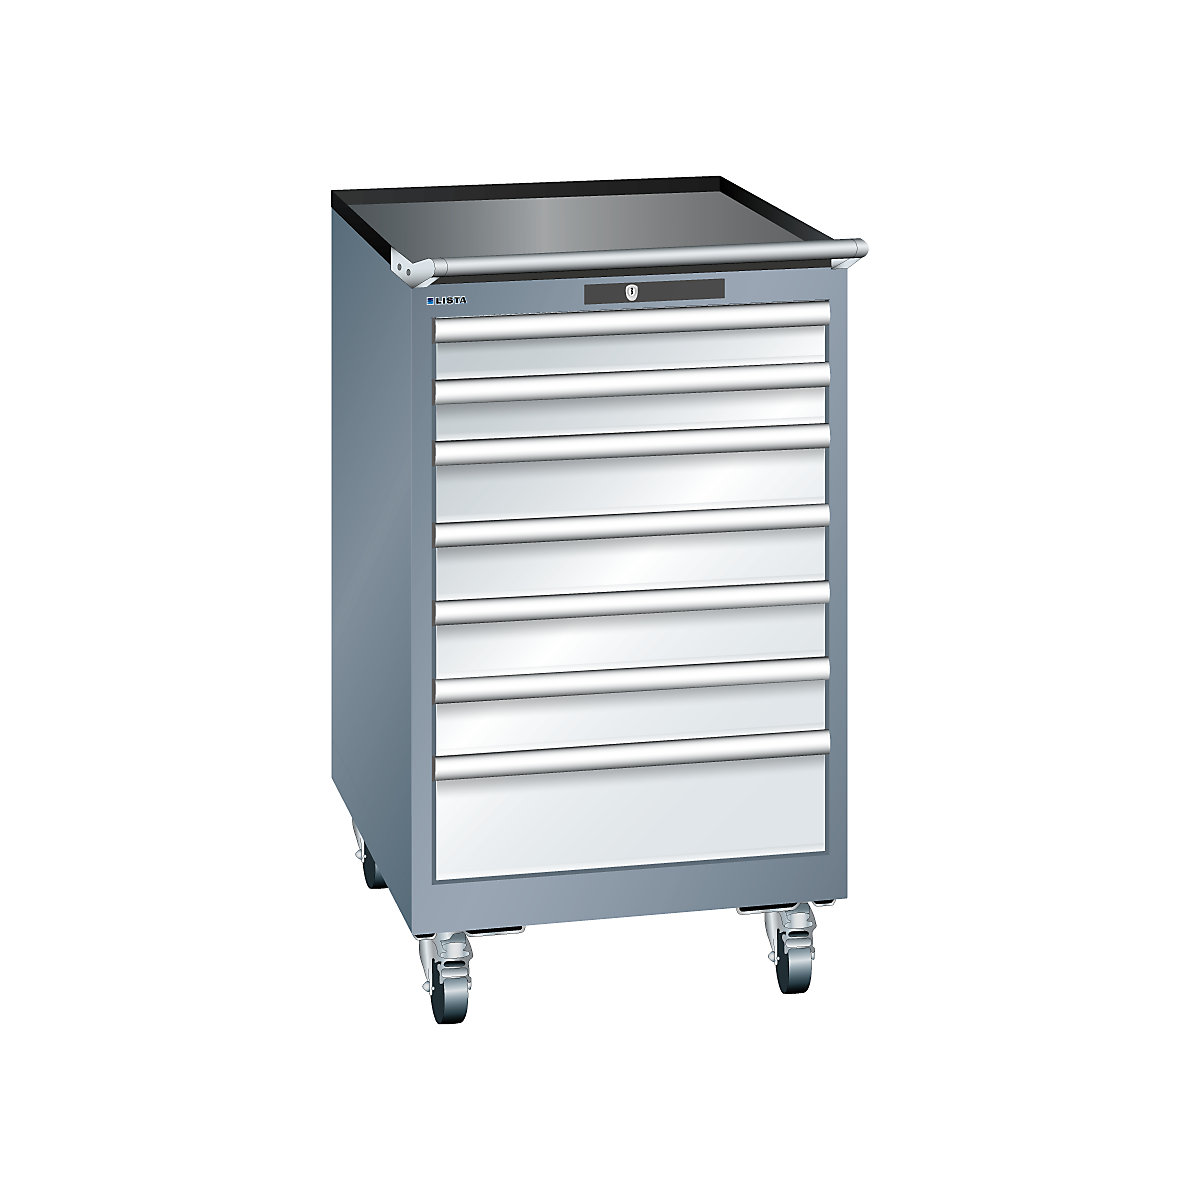 Drawer cupboard, sheet steel – LISTA, HxW 990 x 564 mm, 7 drawers, mobile, grey metallic / light grey-17